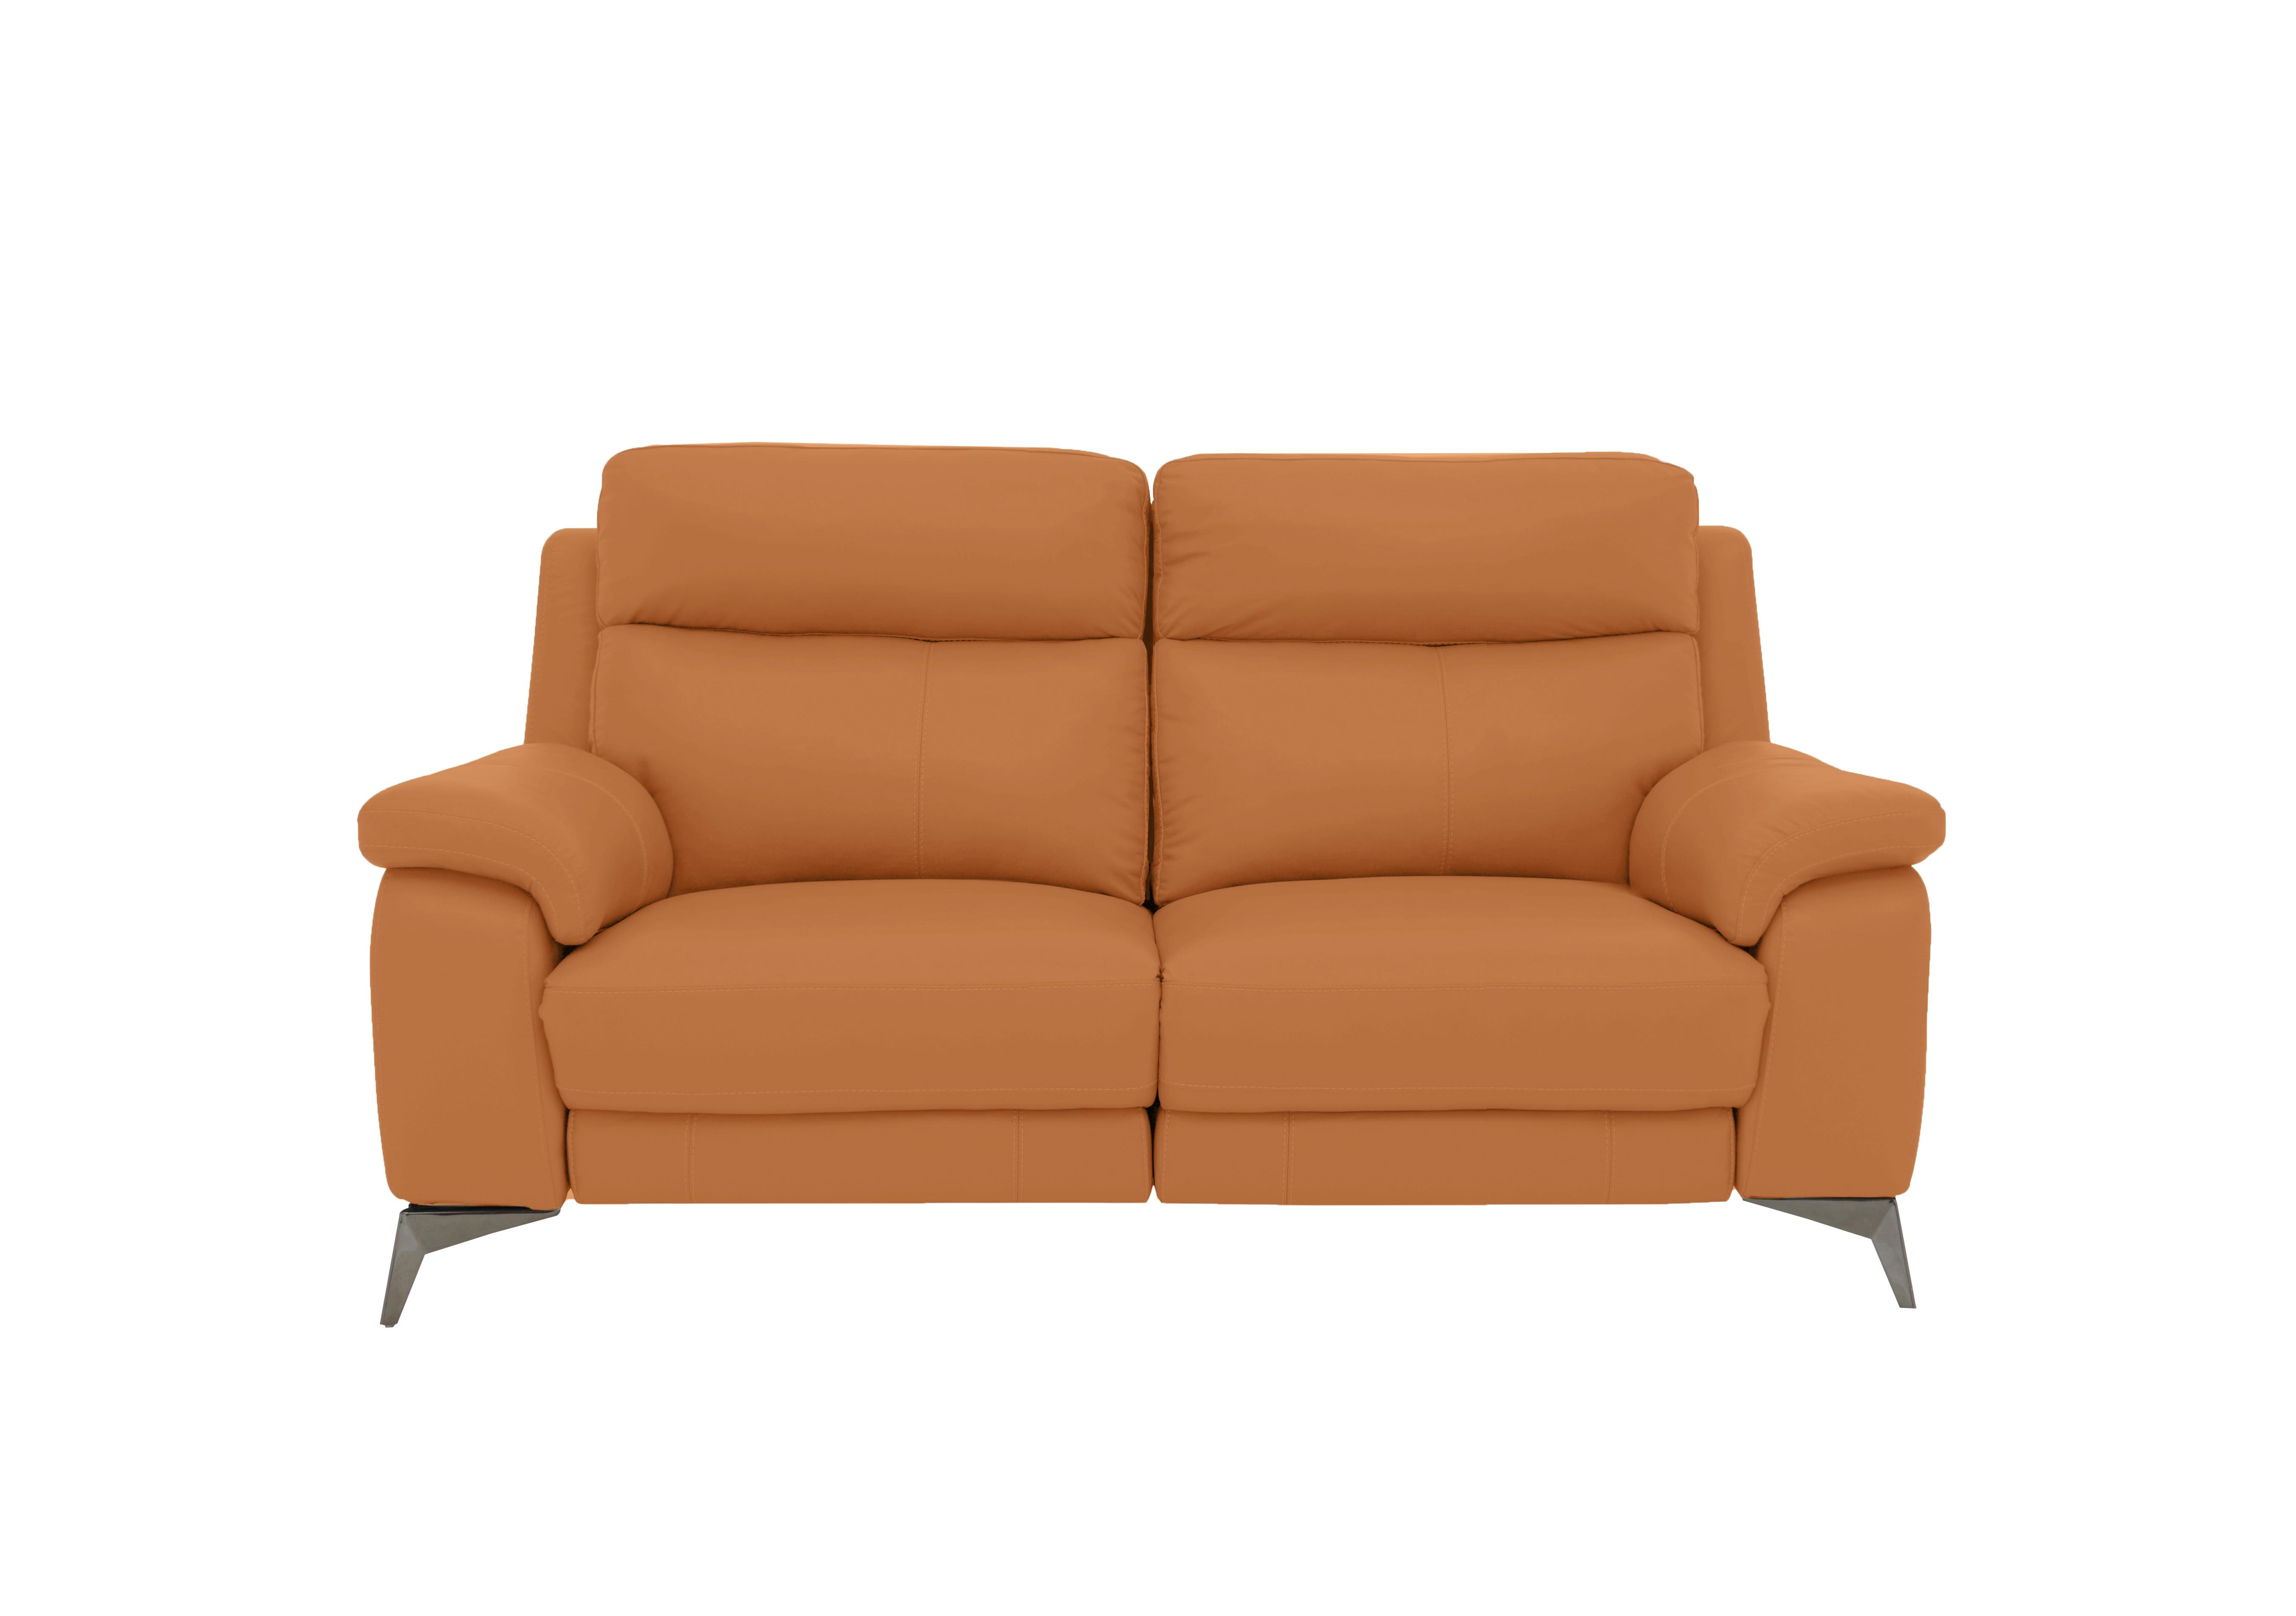 Missouri 2 Seater Leather Sofa in Bv-335e Honey Yellow on Furniture Village